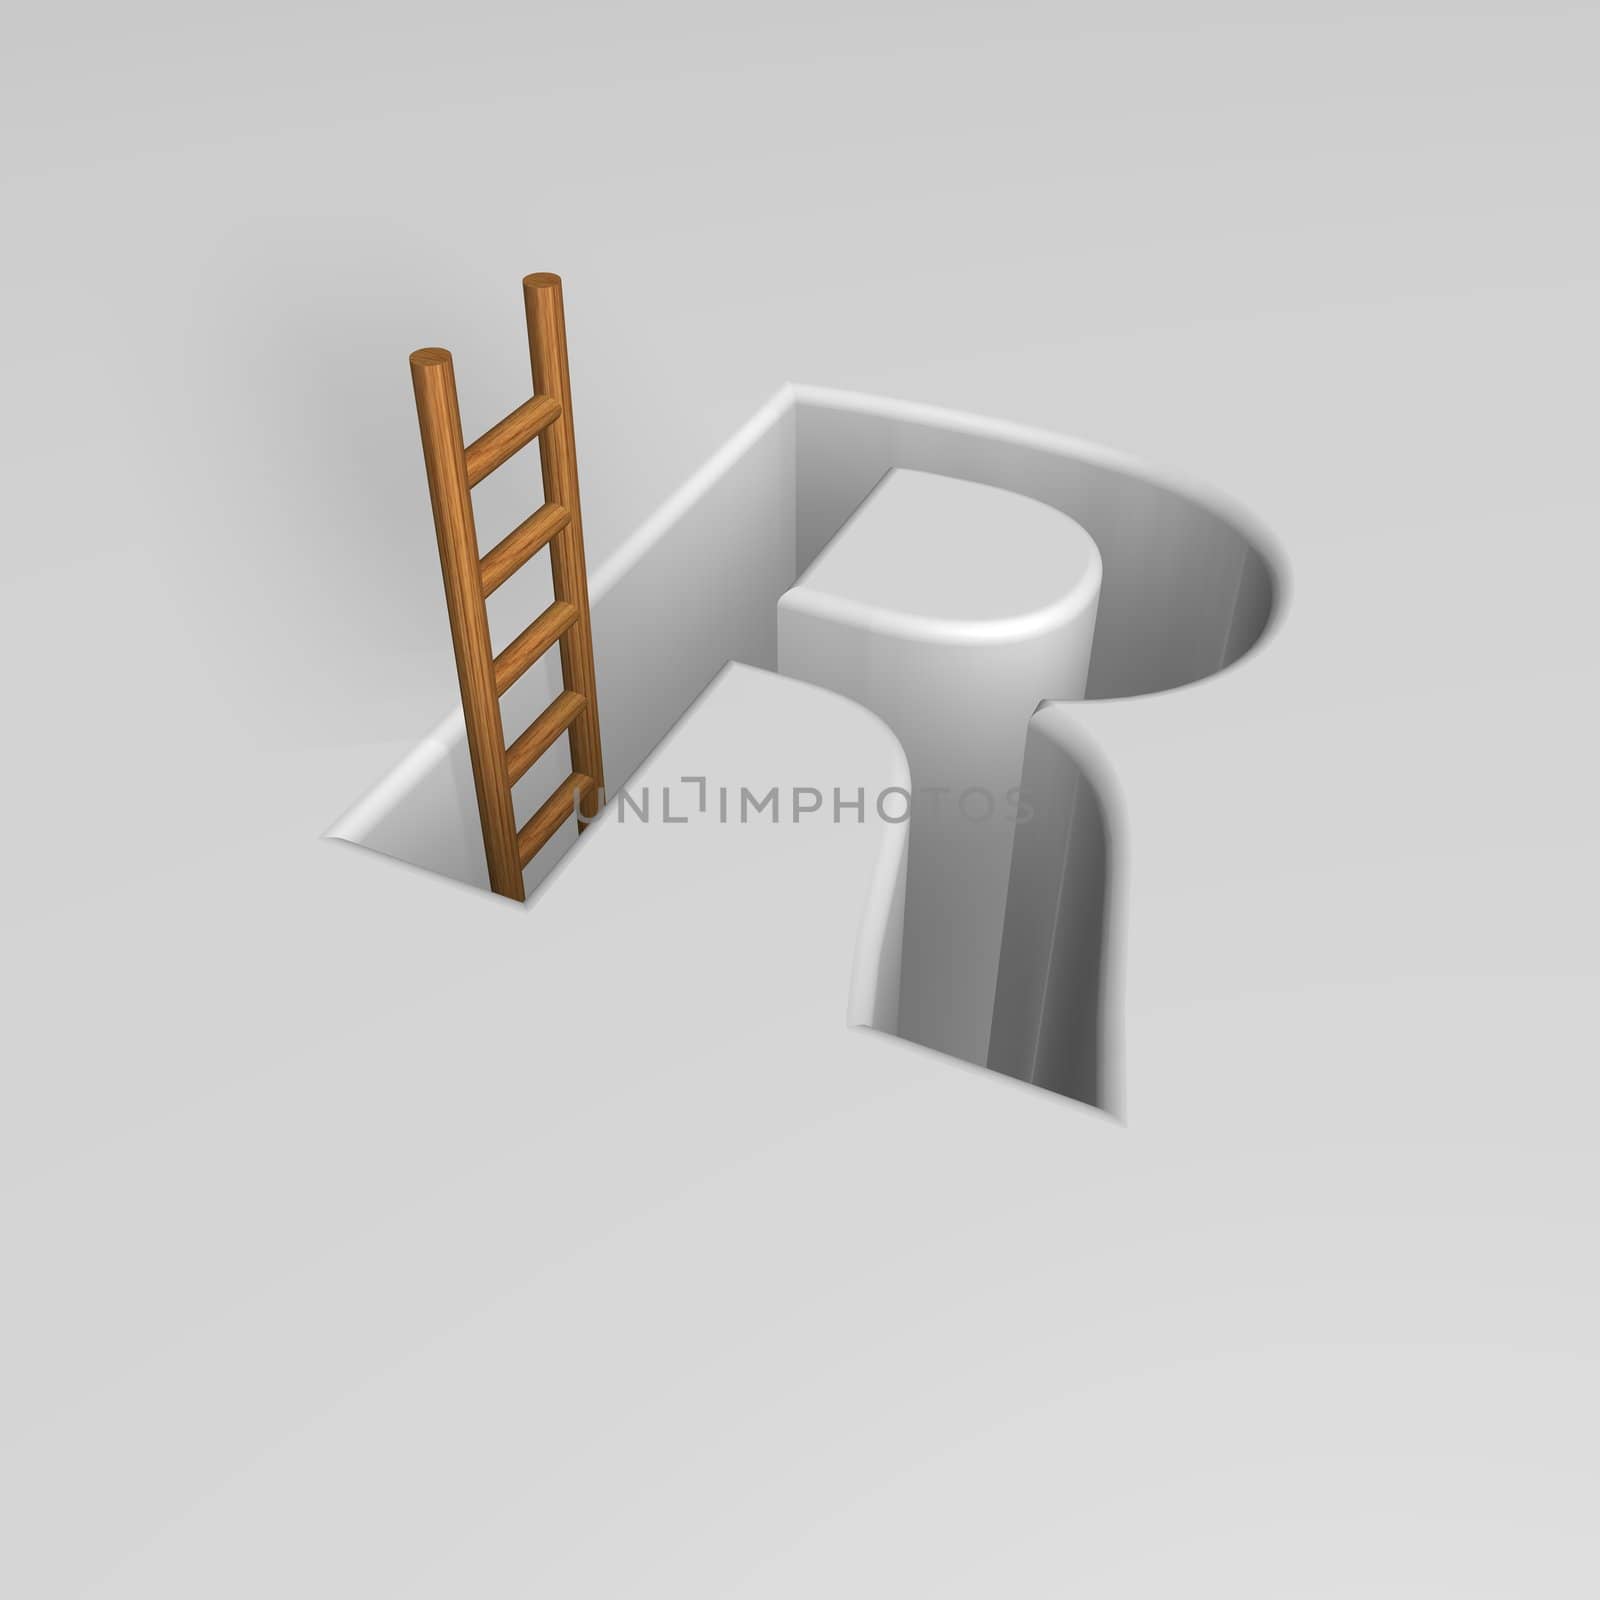 uppercase letter r shape hole with ladder - 3d illustration